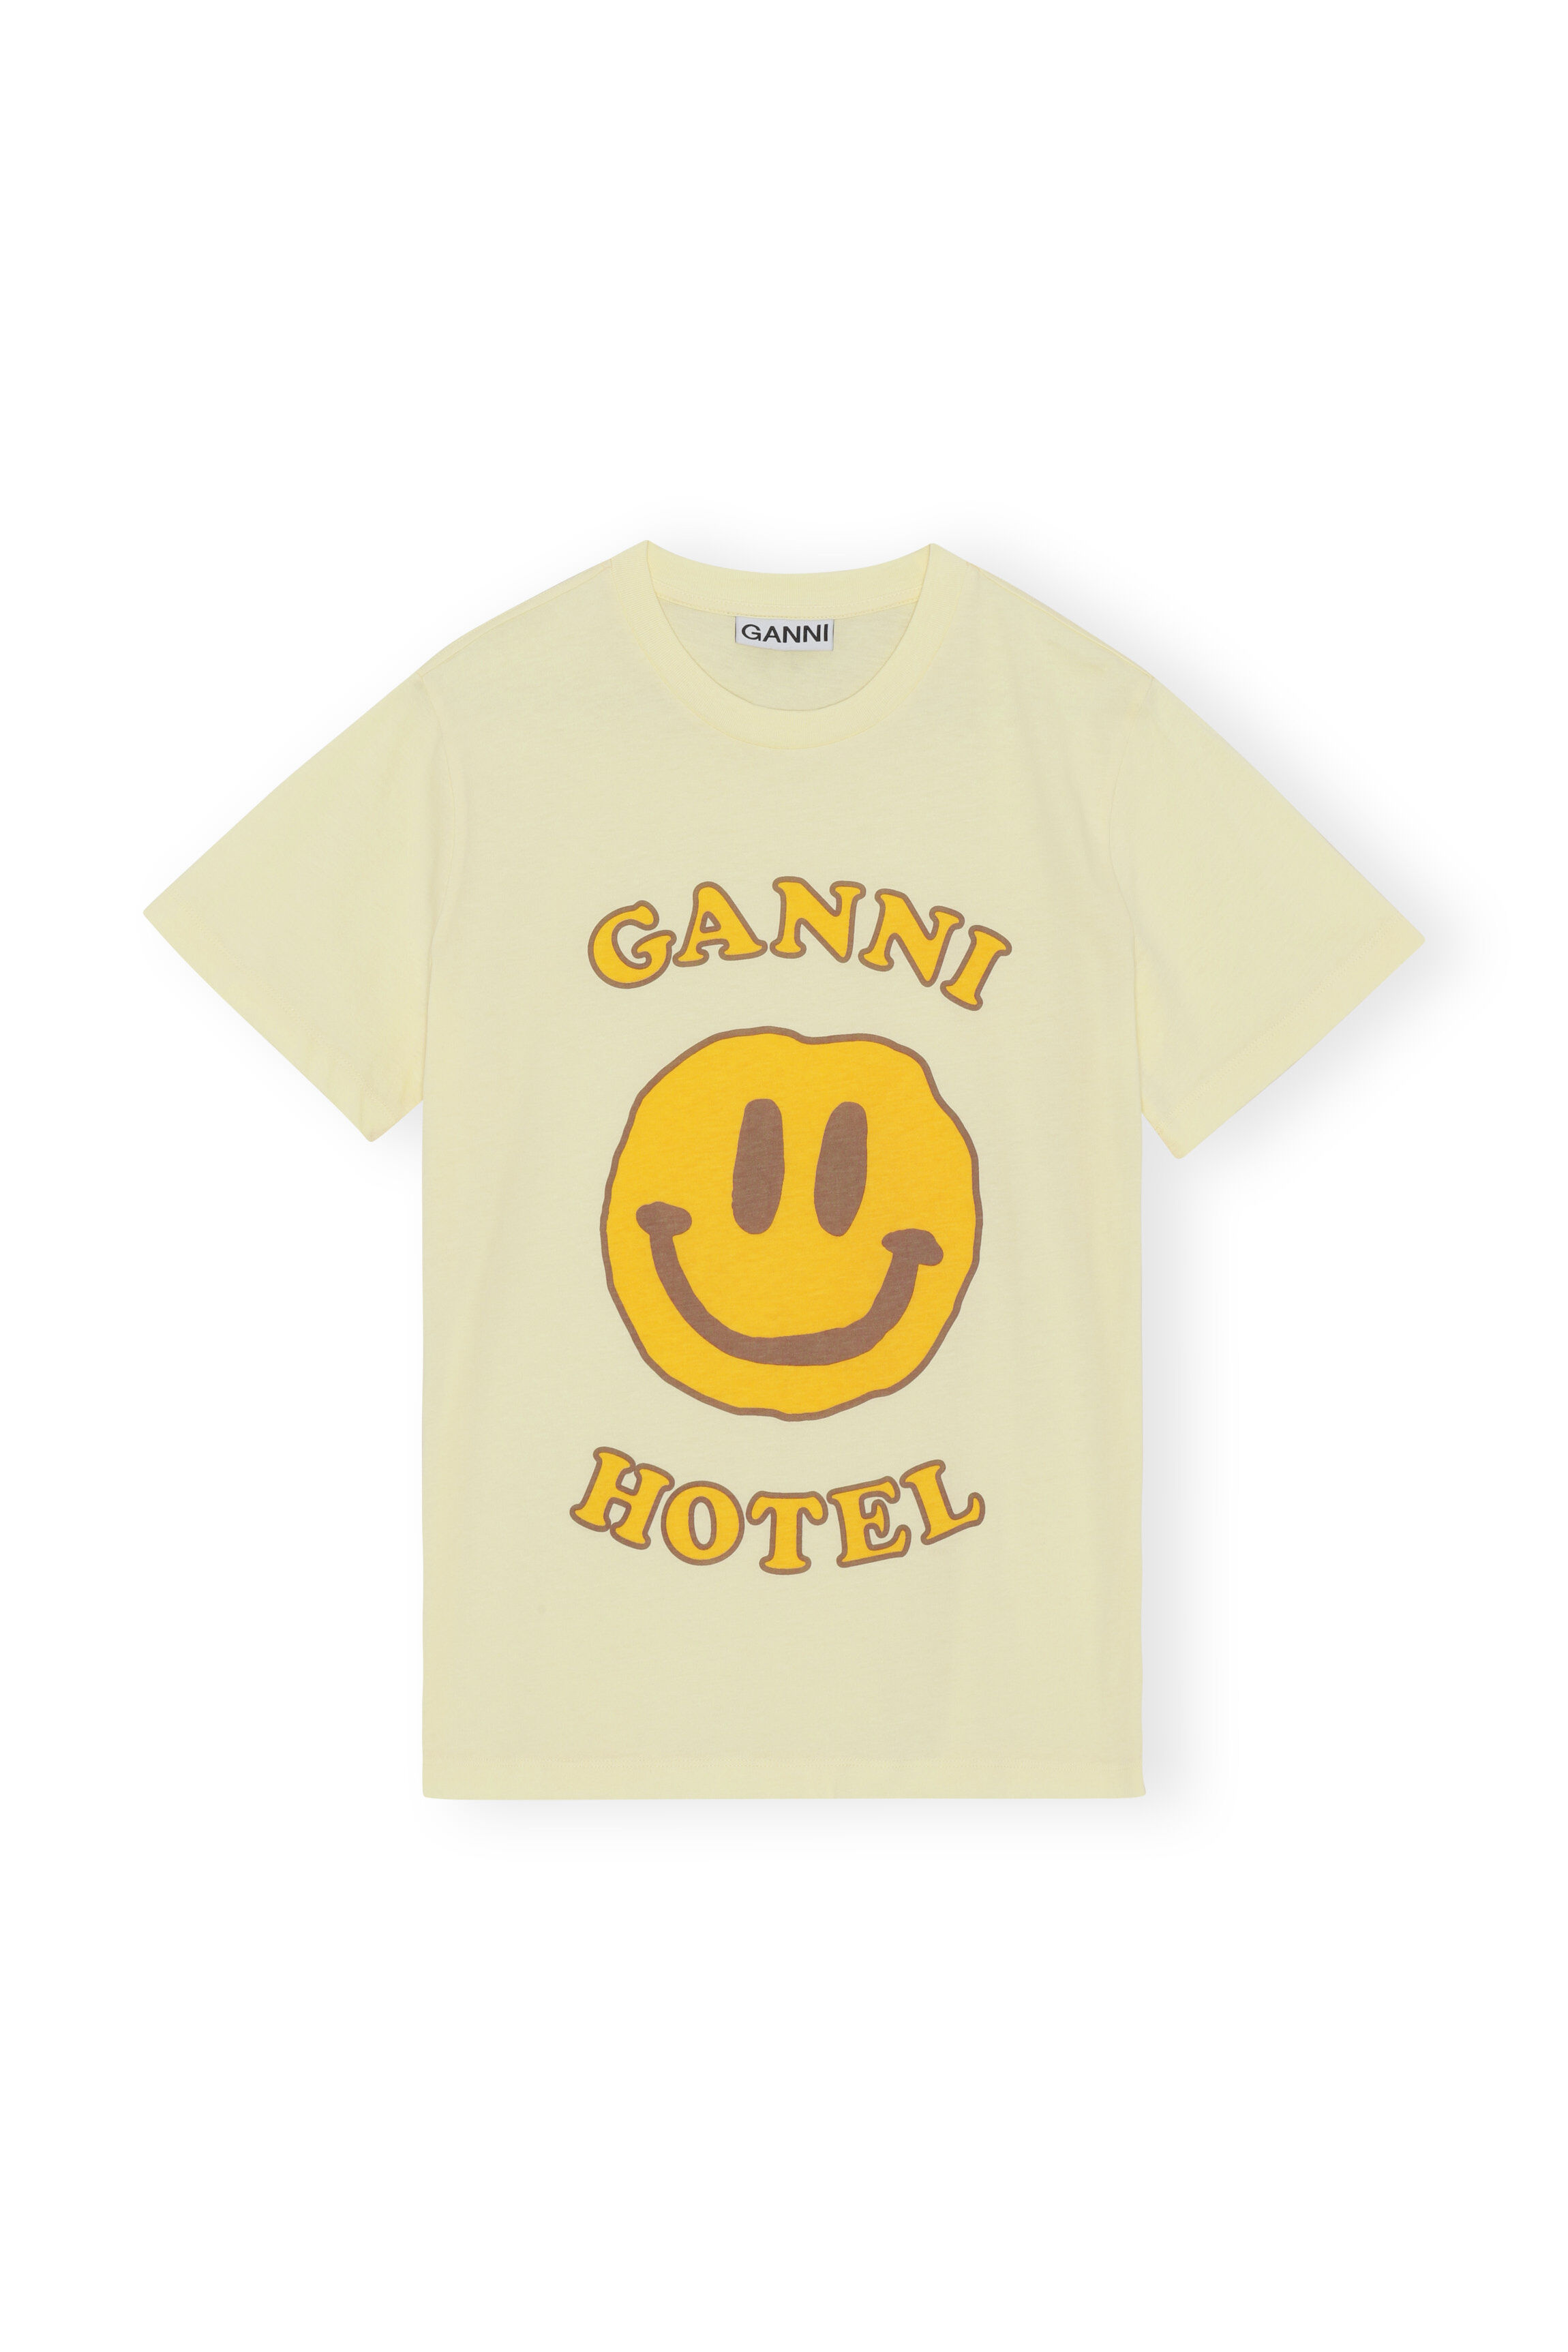 Ganni T-shirt lila-wit prints met een thema casual uitstraling Mode Shirts T-shirts